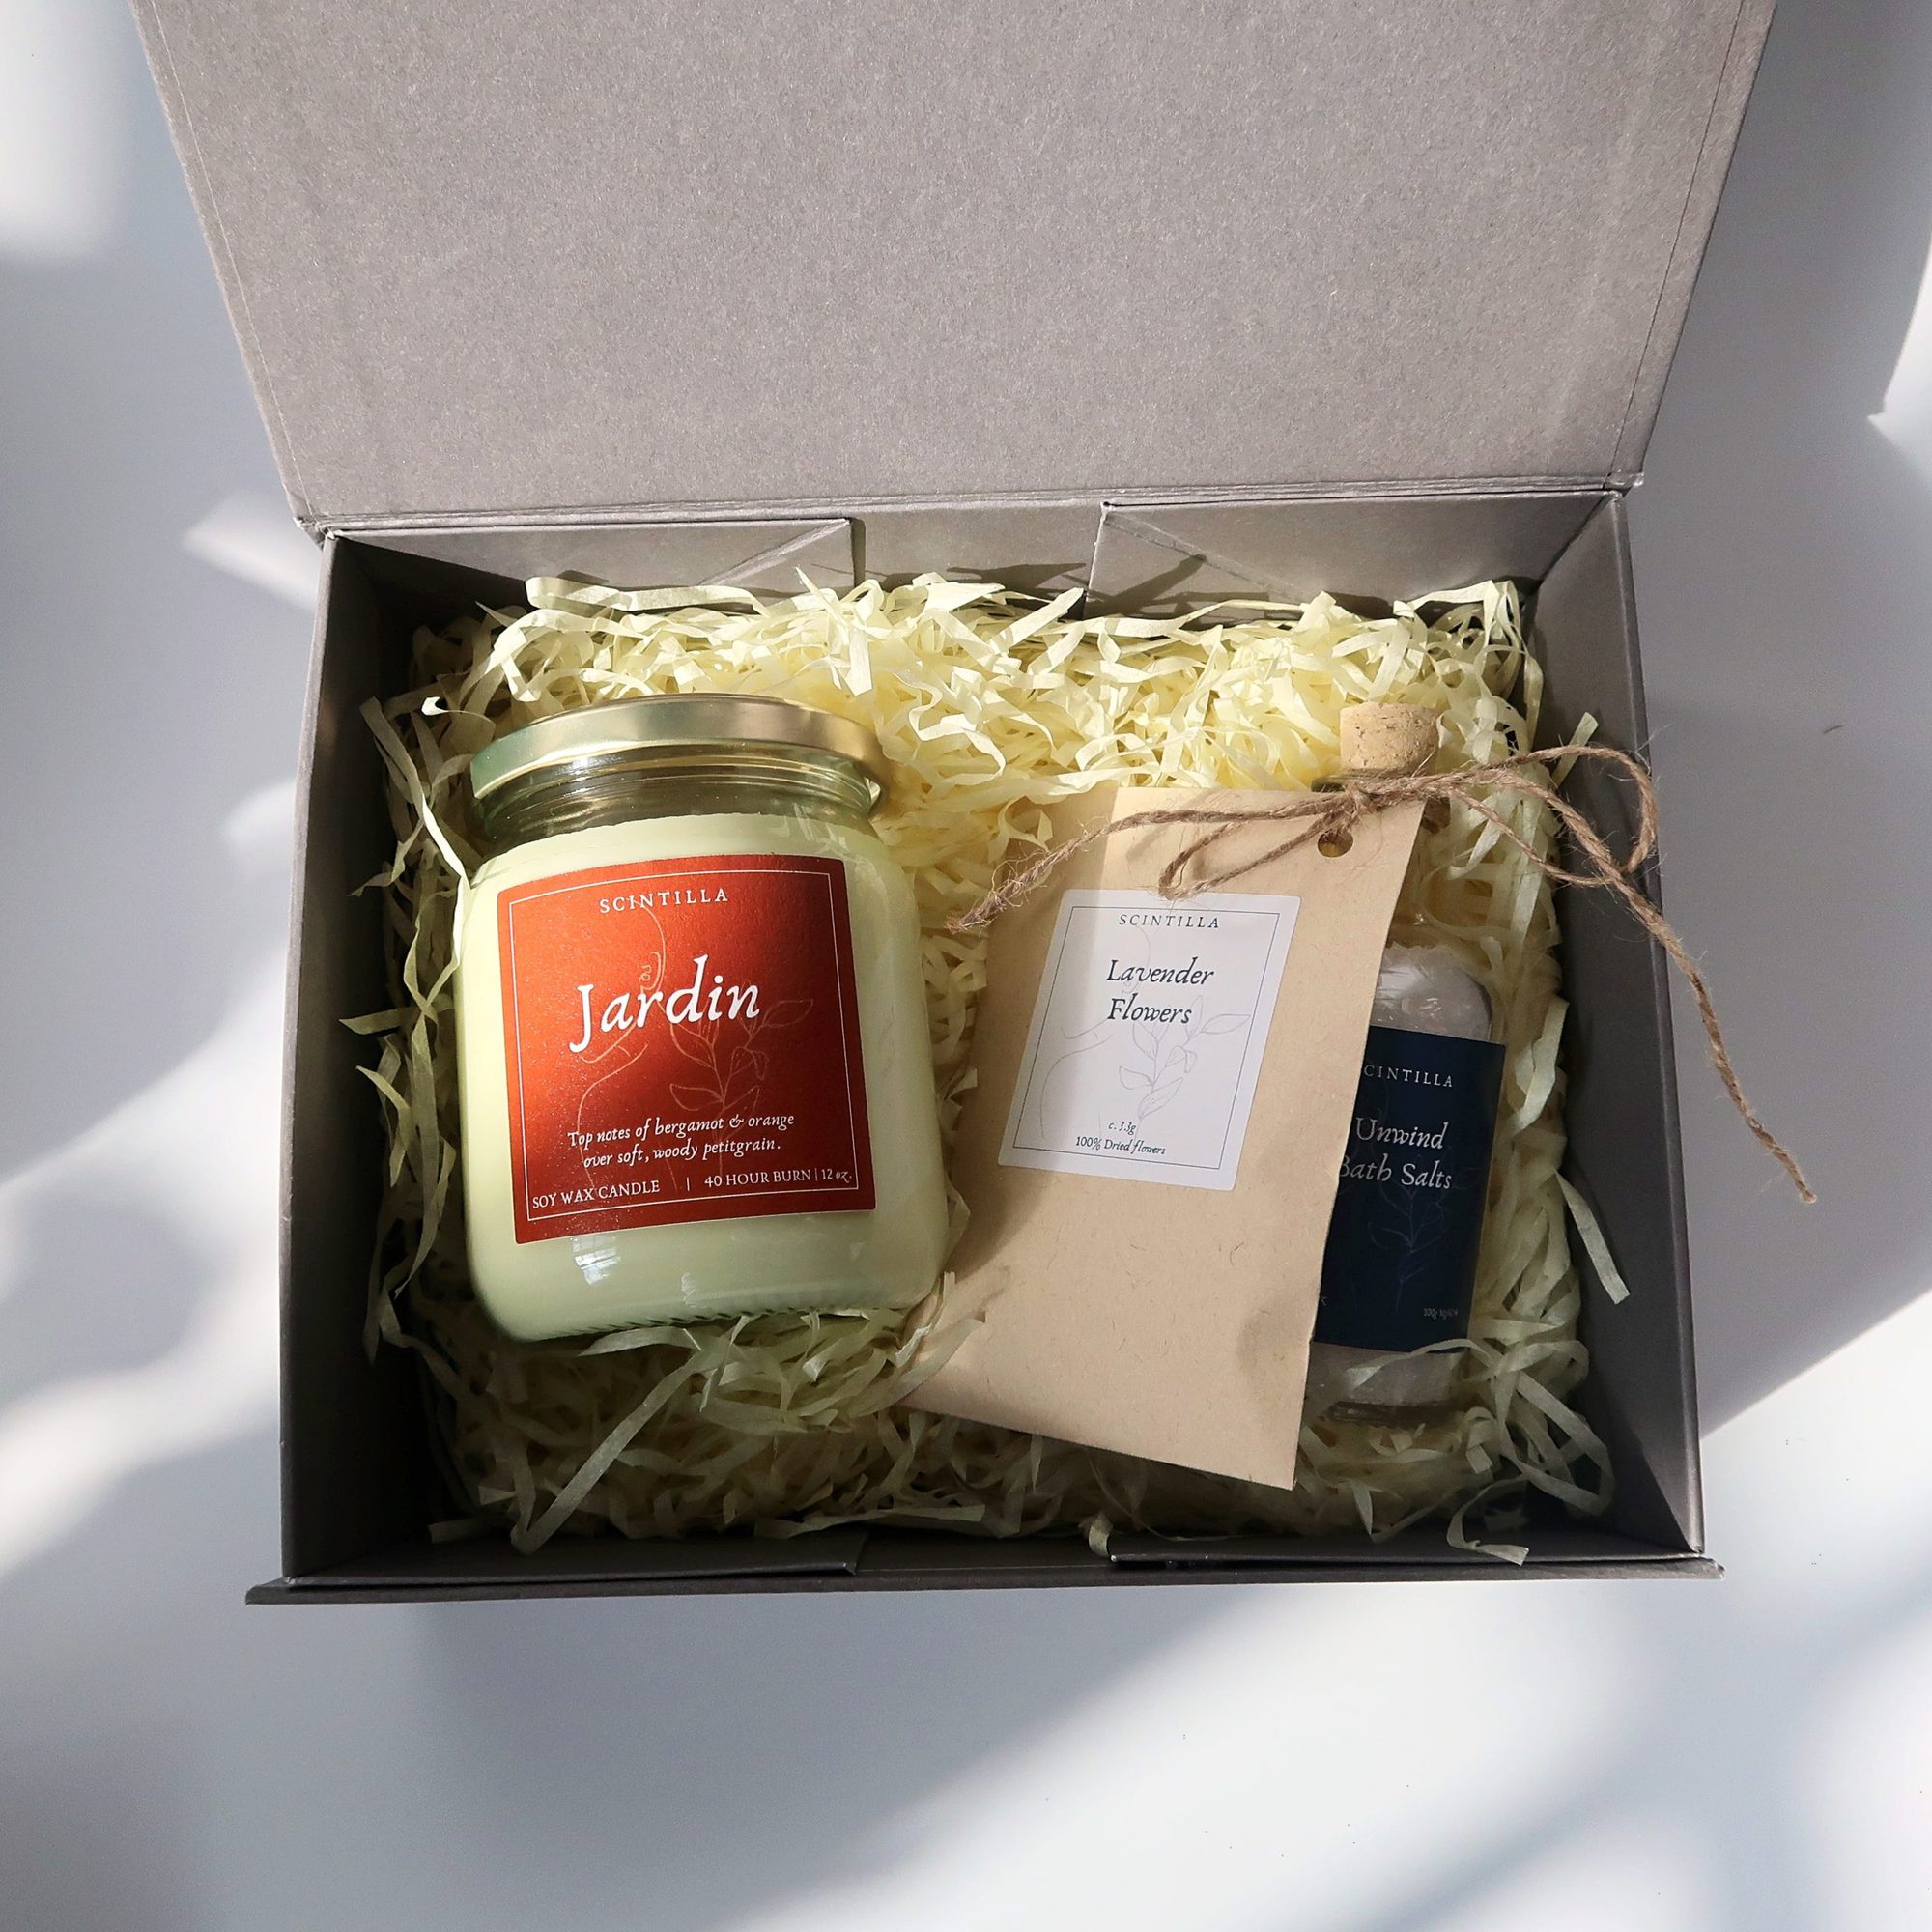 Mini Relax Candle and Bath Salt Gift Box